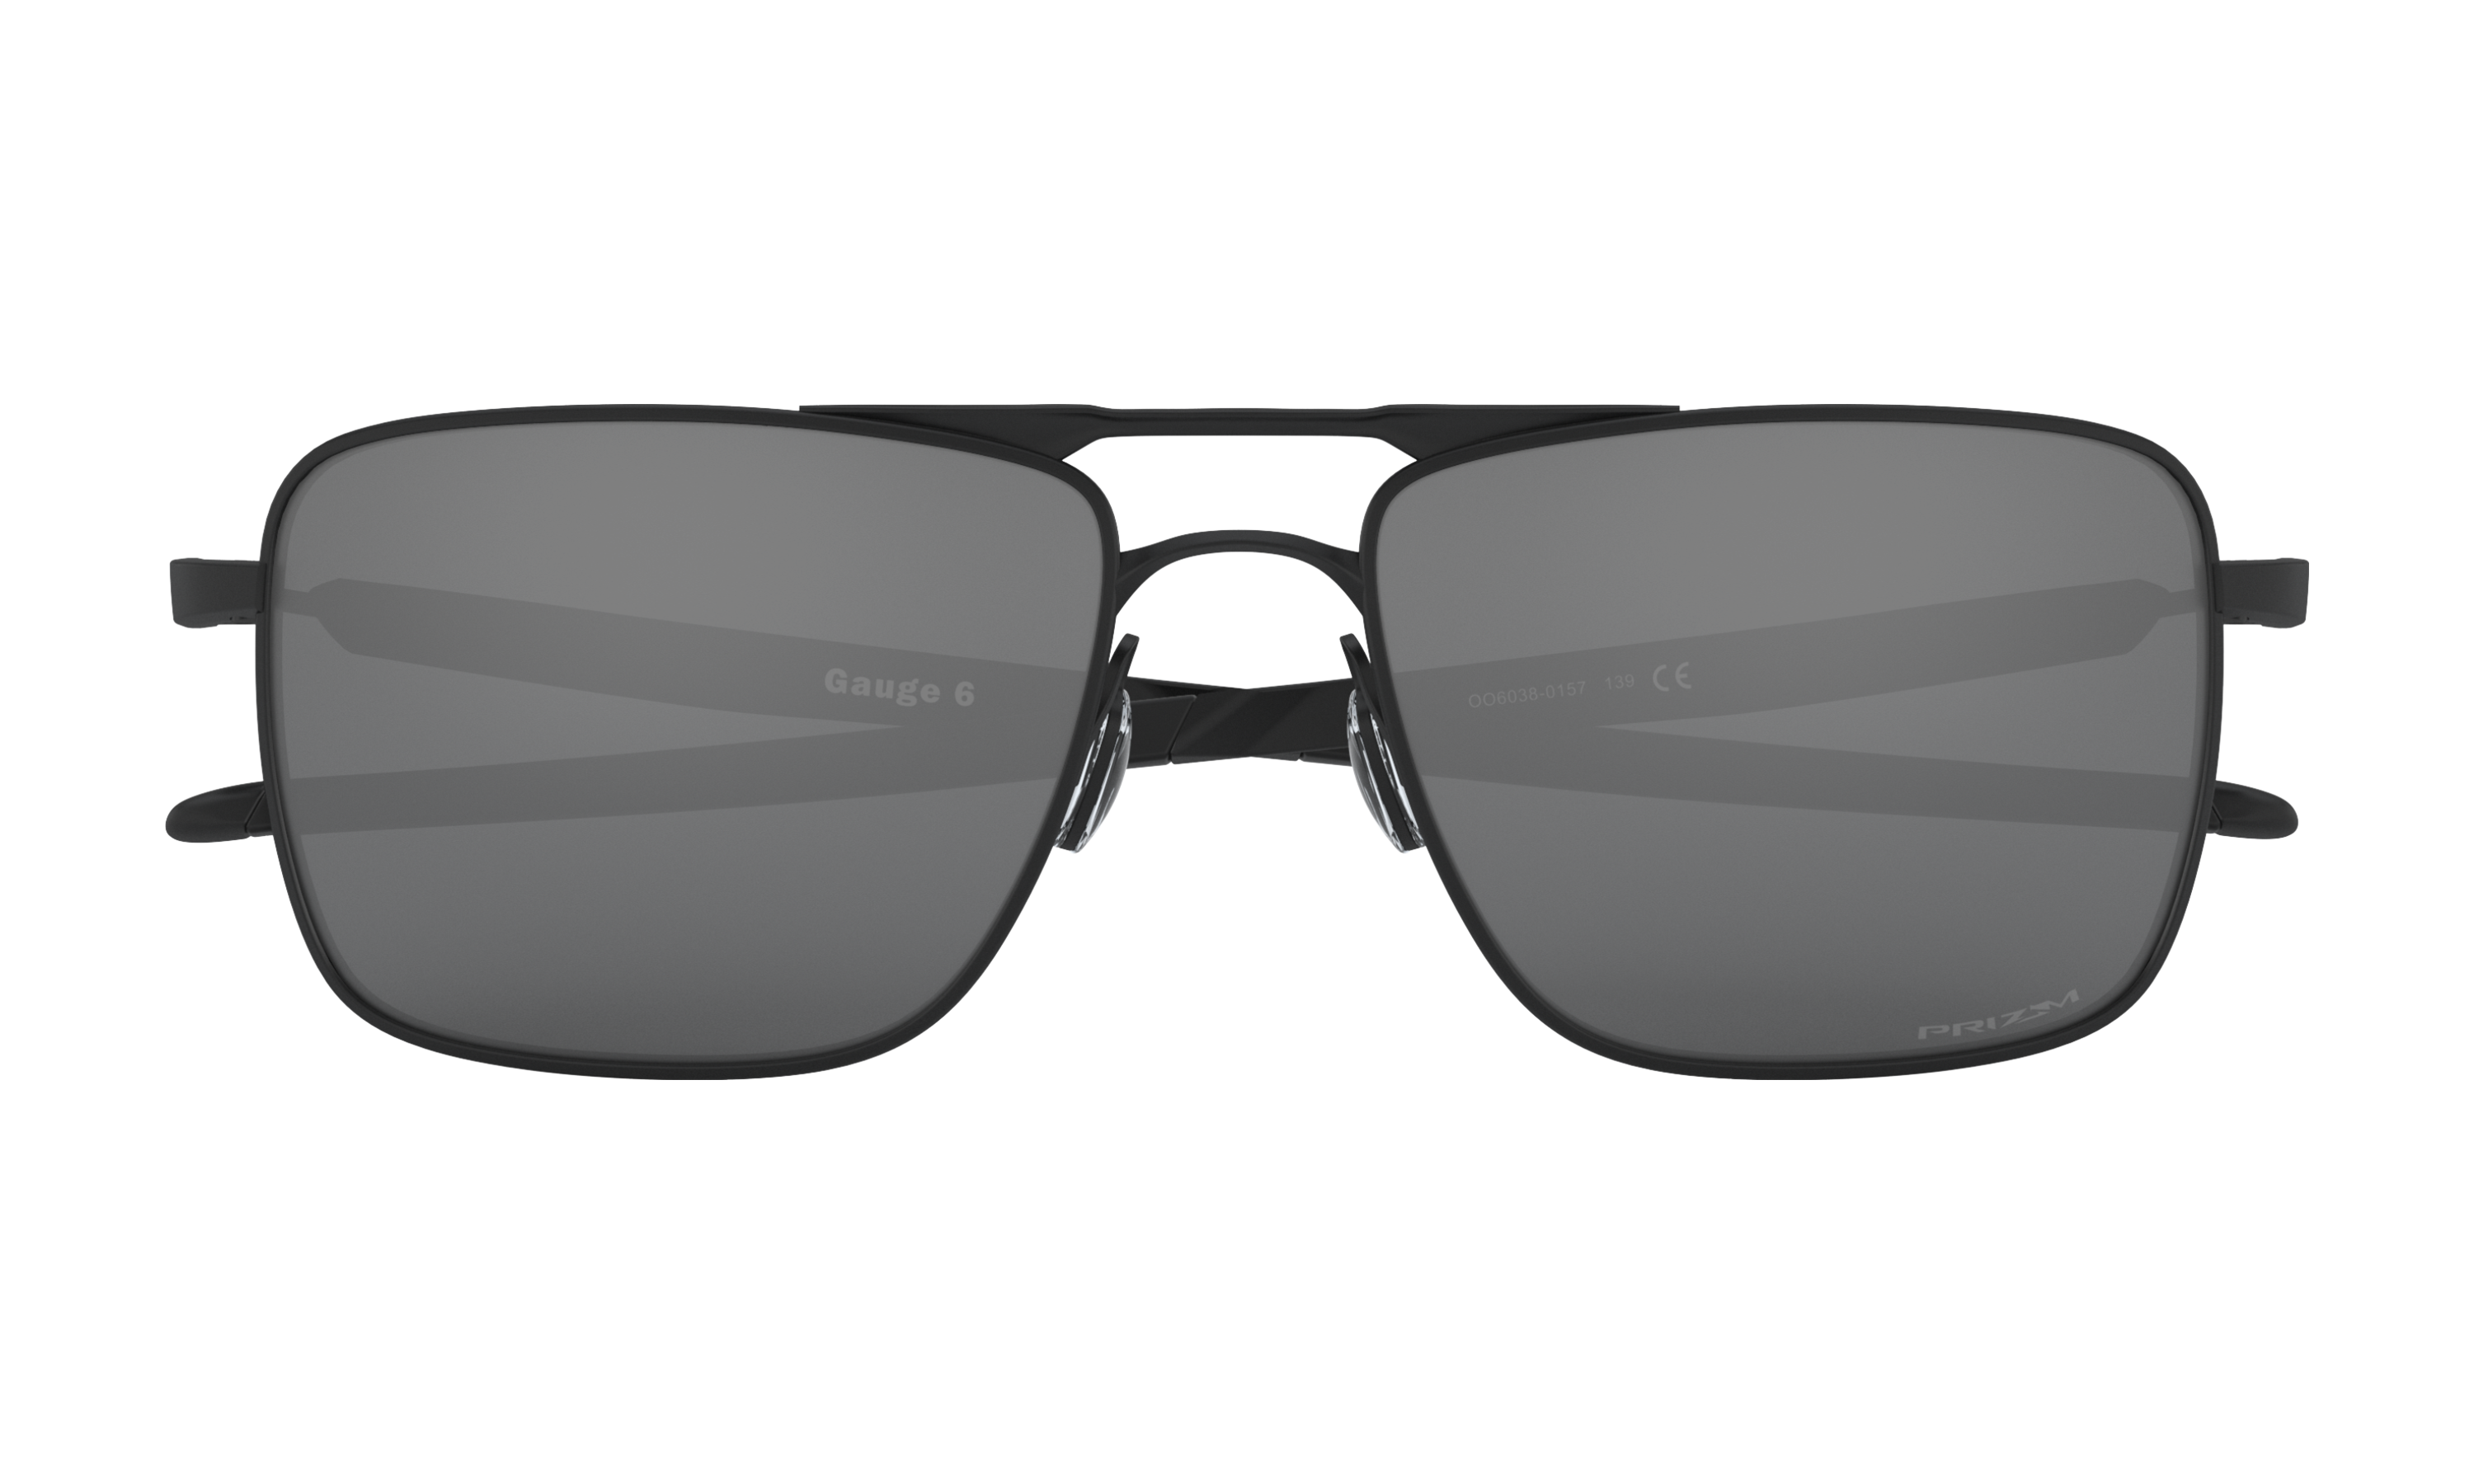 Gauge 6 Powder Coal Sunglasses | Oakley® JP